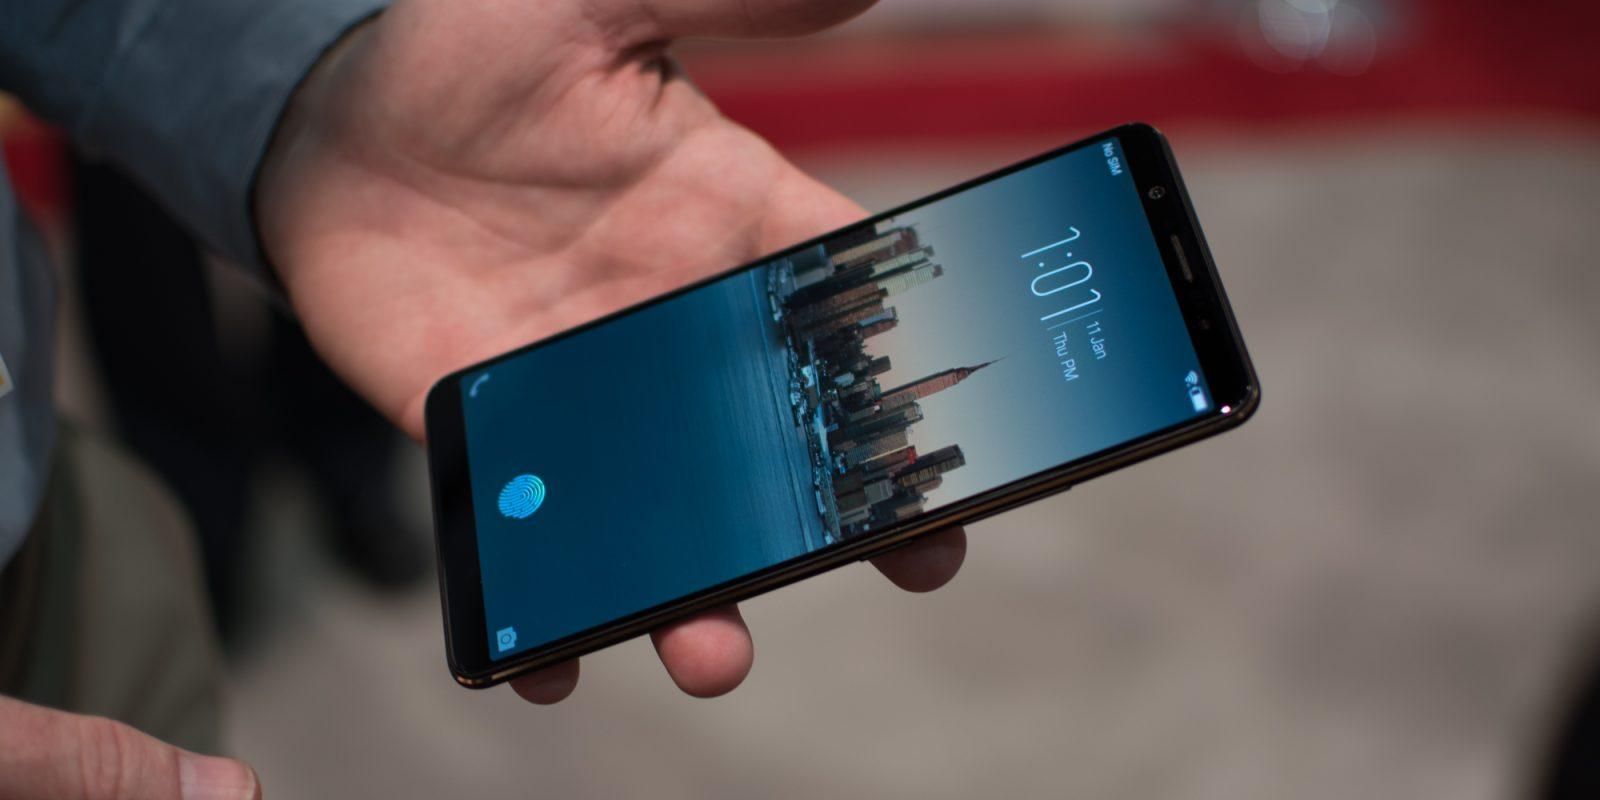 Samsung Galaxy S10 може стати "вбивцею" Huawei P20 Pro